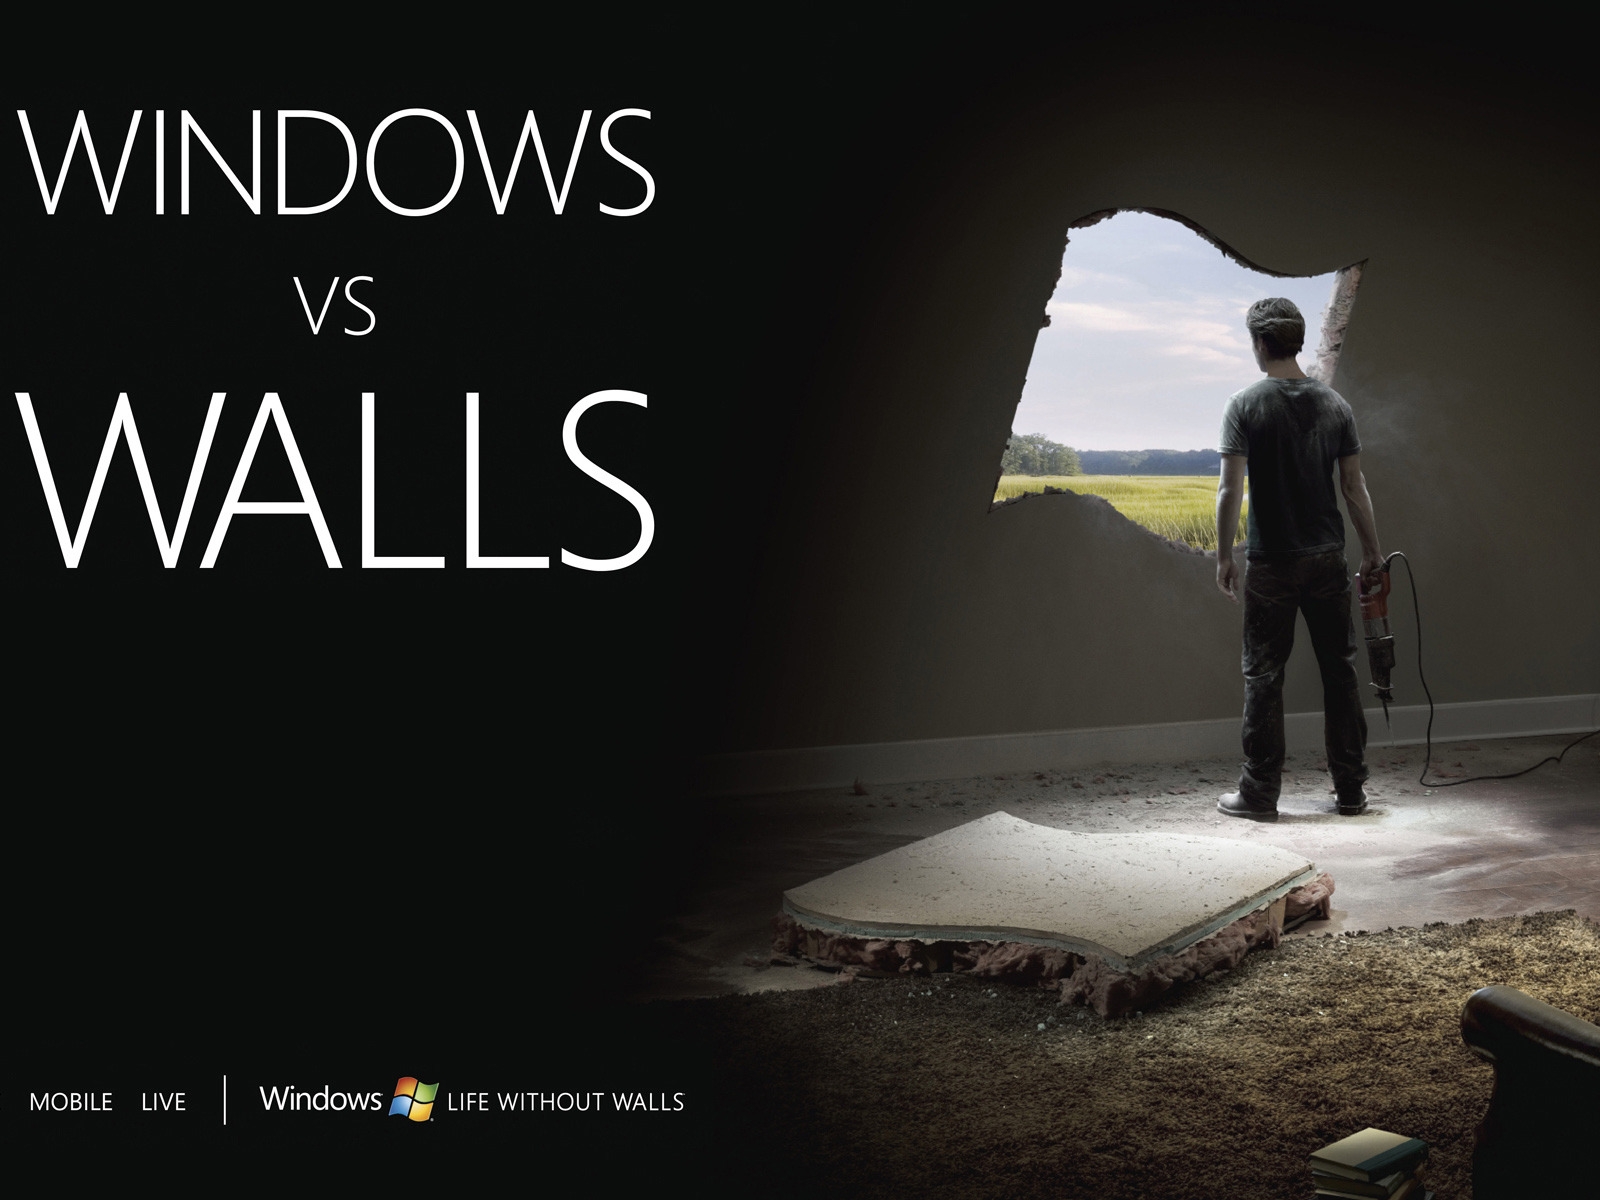 Windows vs Walls for 1600 x 1200 resolution